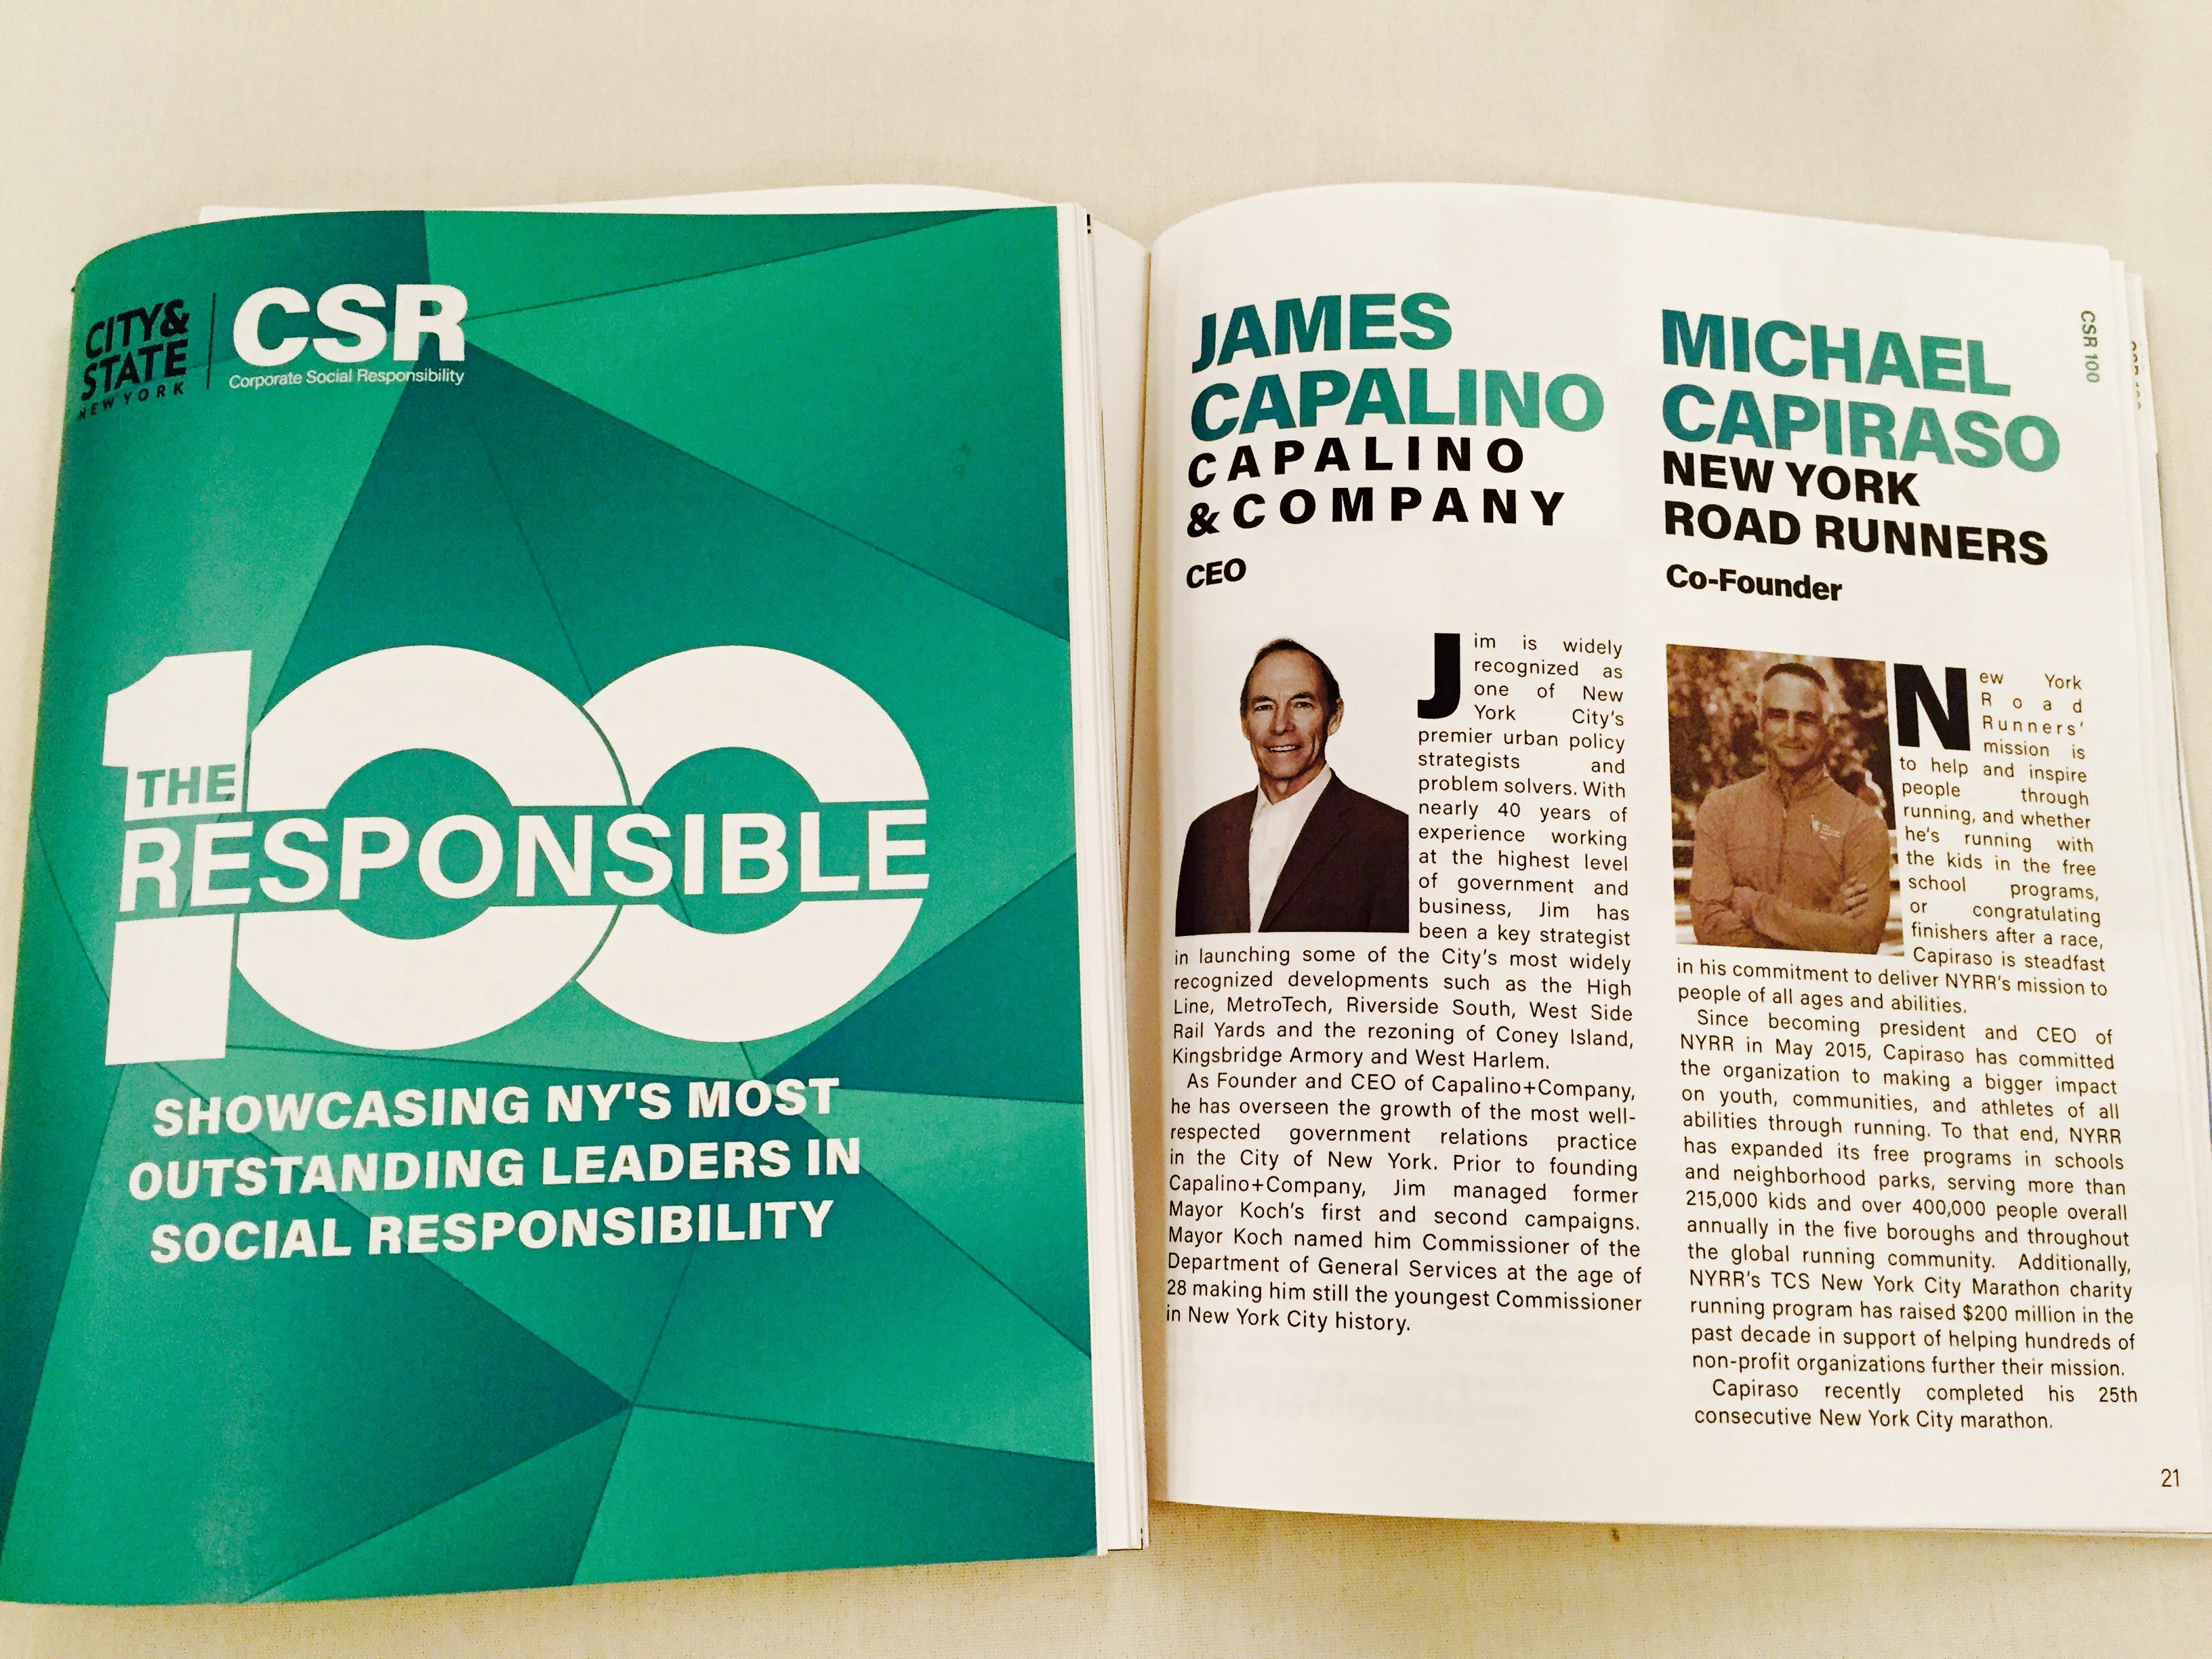 Jim Capalino honored at City&State Responsible 100 awards for corporate social responsibility csr 